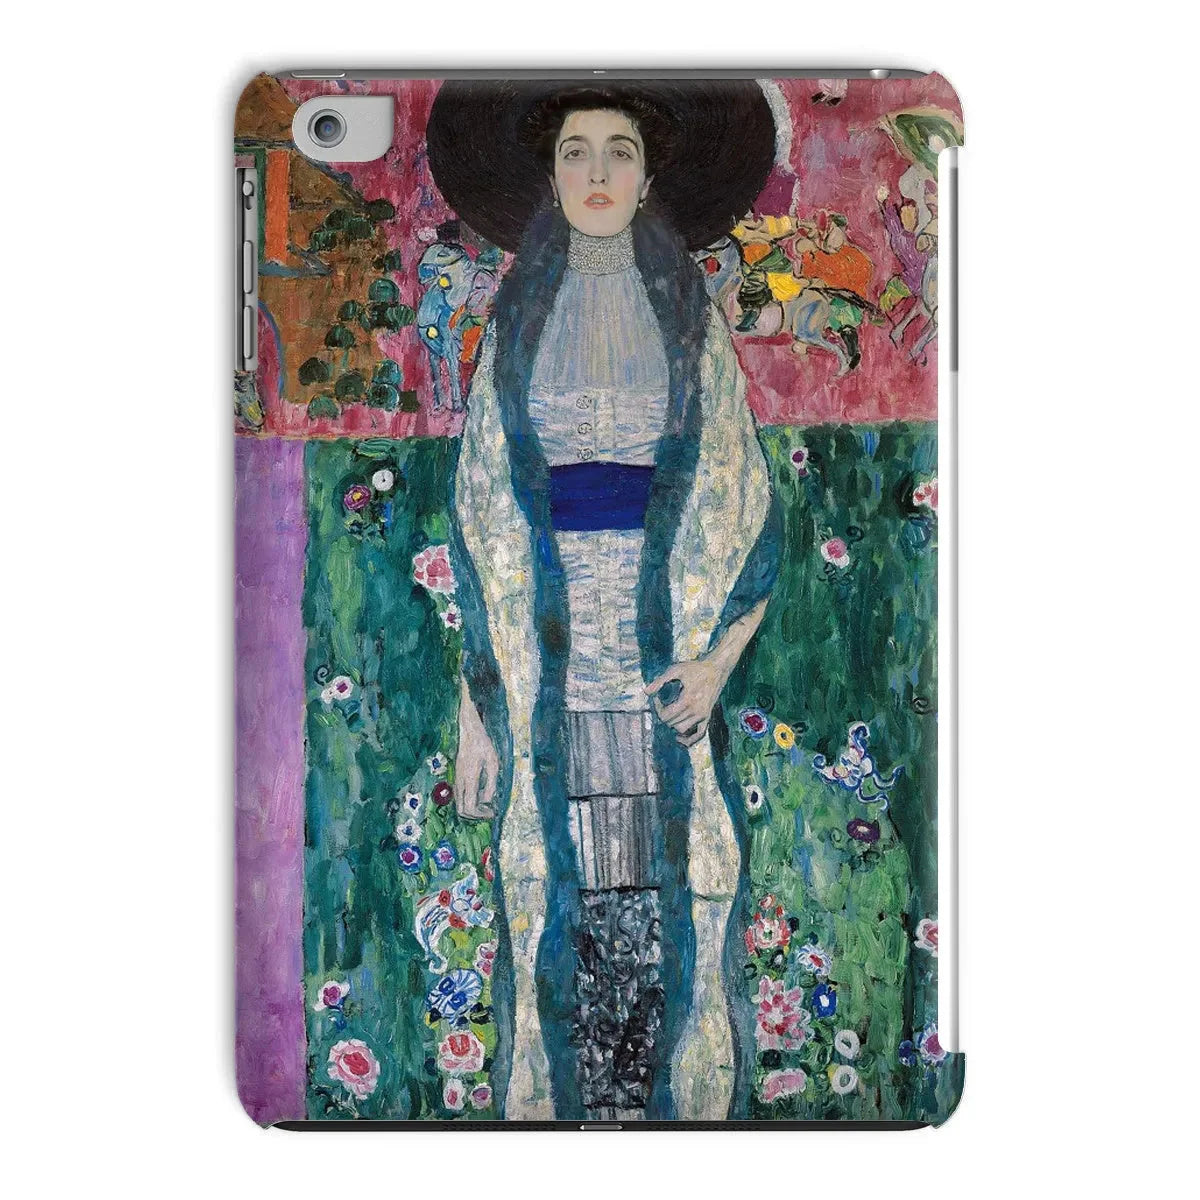 Adele Bloch-bauer By Gustav Klimt Aesthetic Ipad Case - Slim Designer Back Cover - Ipad Mini 1/2/3 - Gloss - Tablet